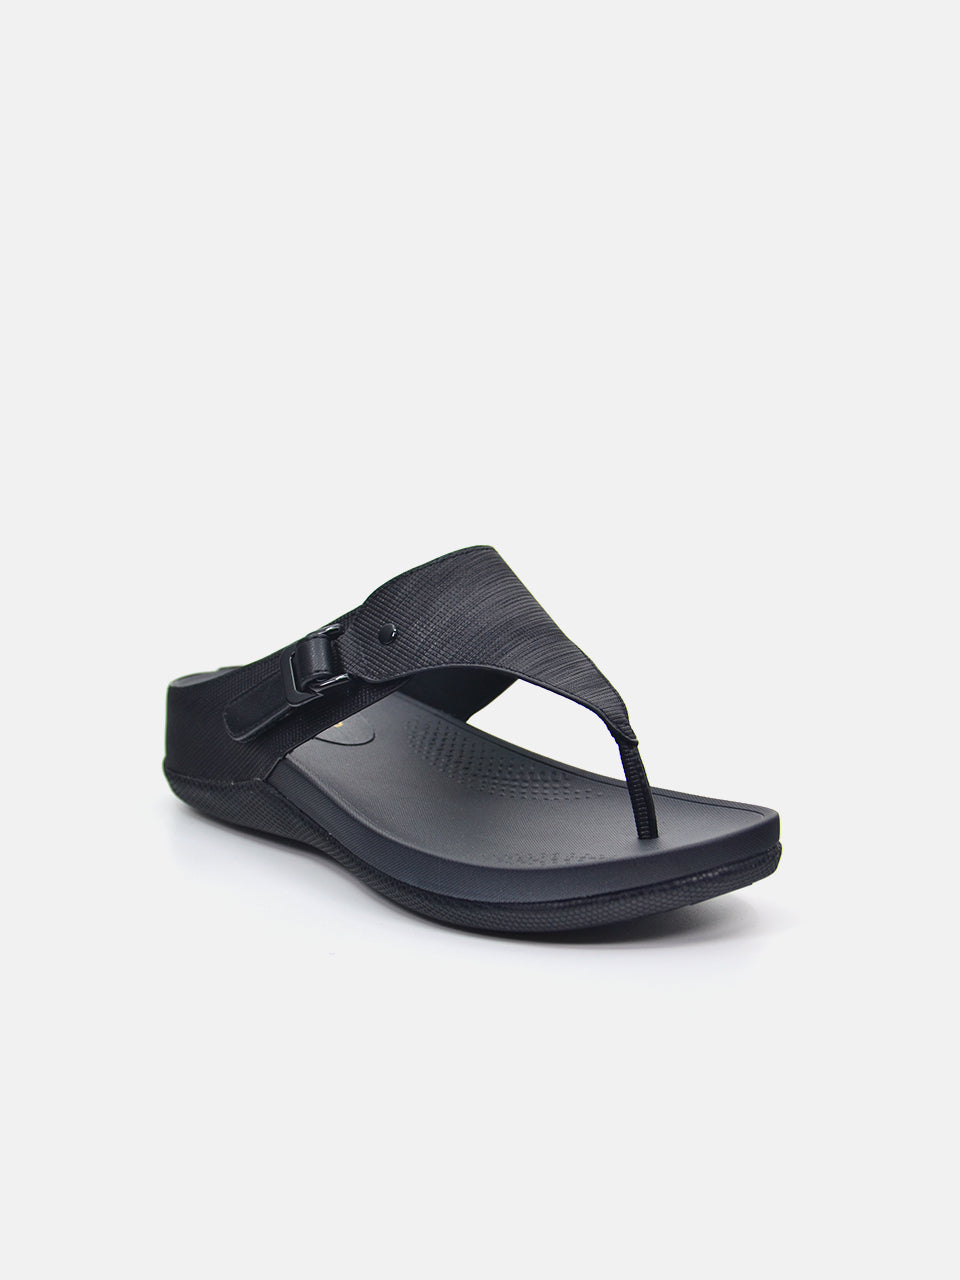 Michelle Morgan 814XY66A Women's Flat Sandals #color_Black